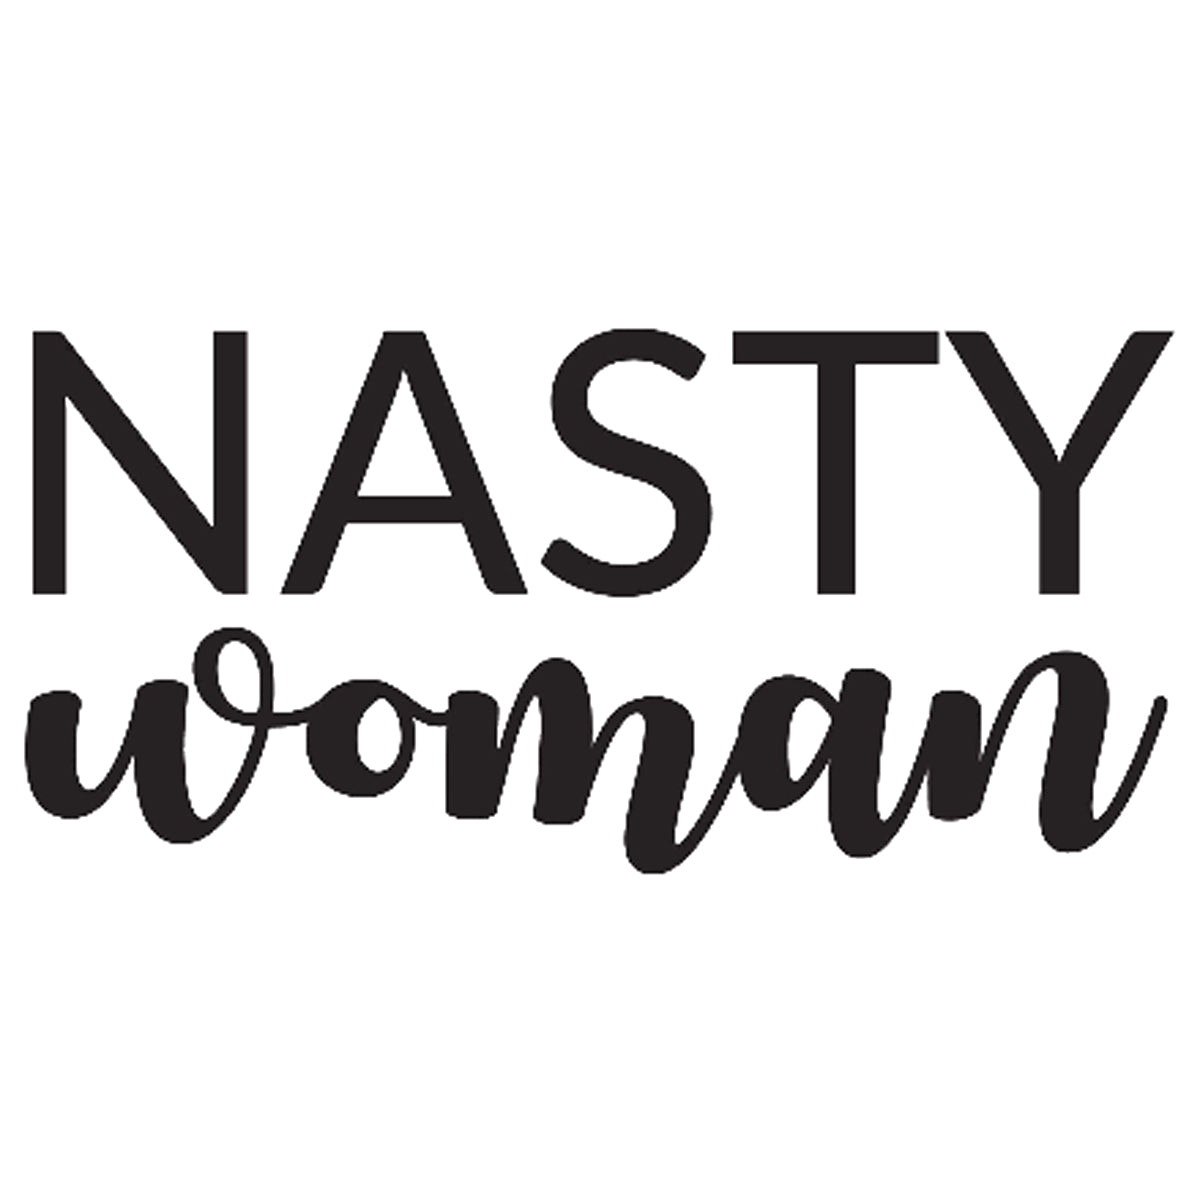 Nasty Woman Printed Tee Humorous Shirt 411 